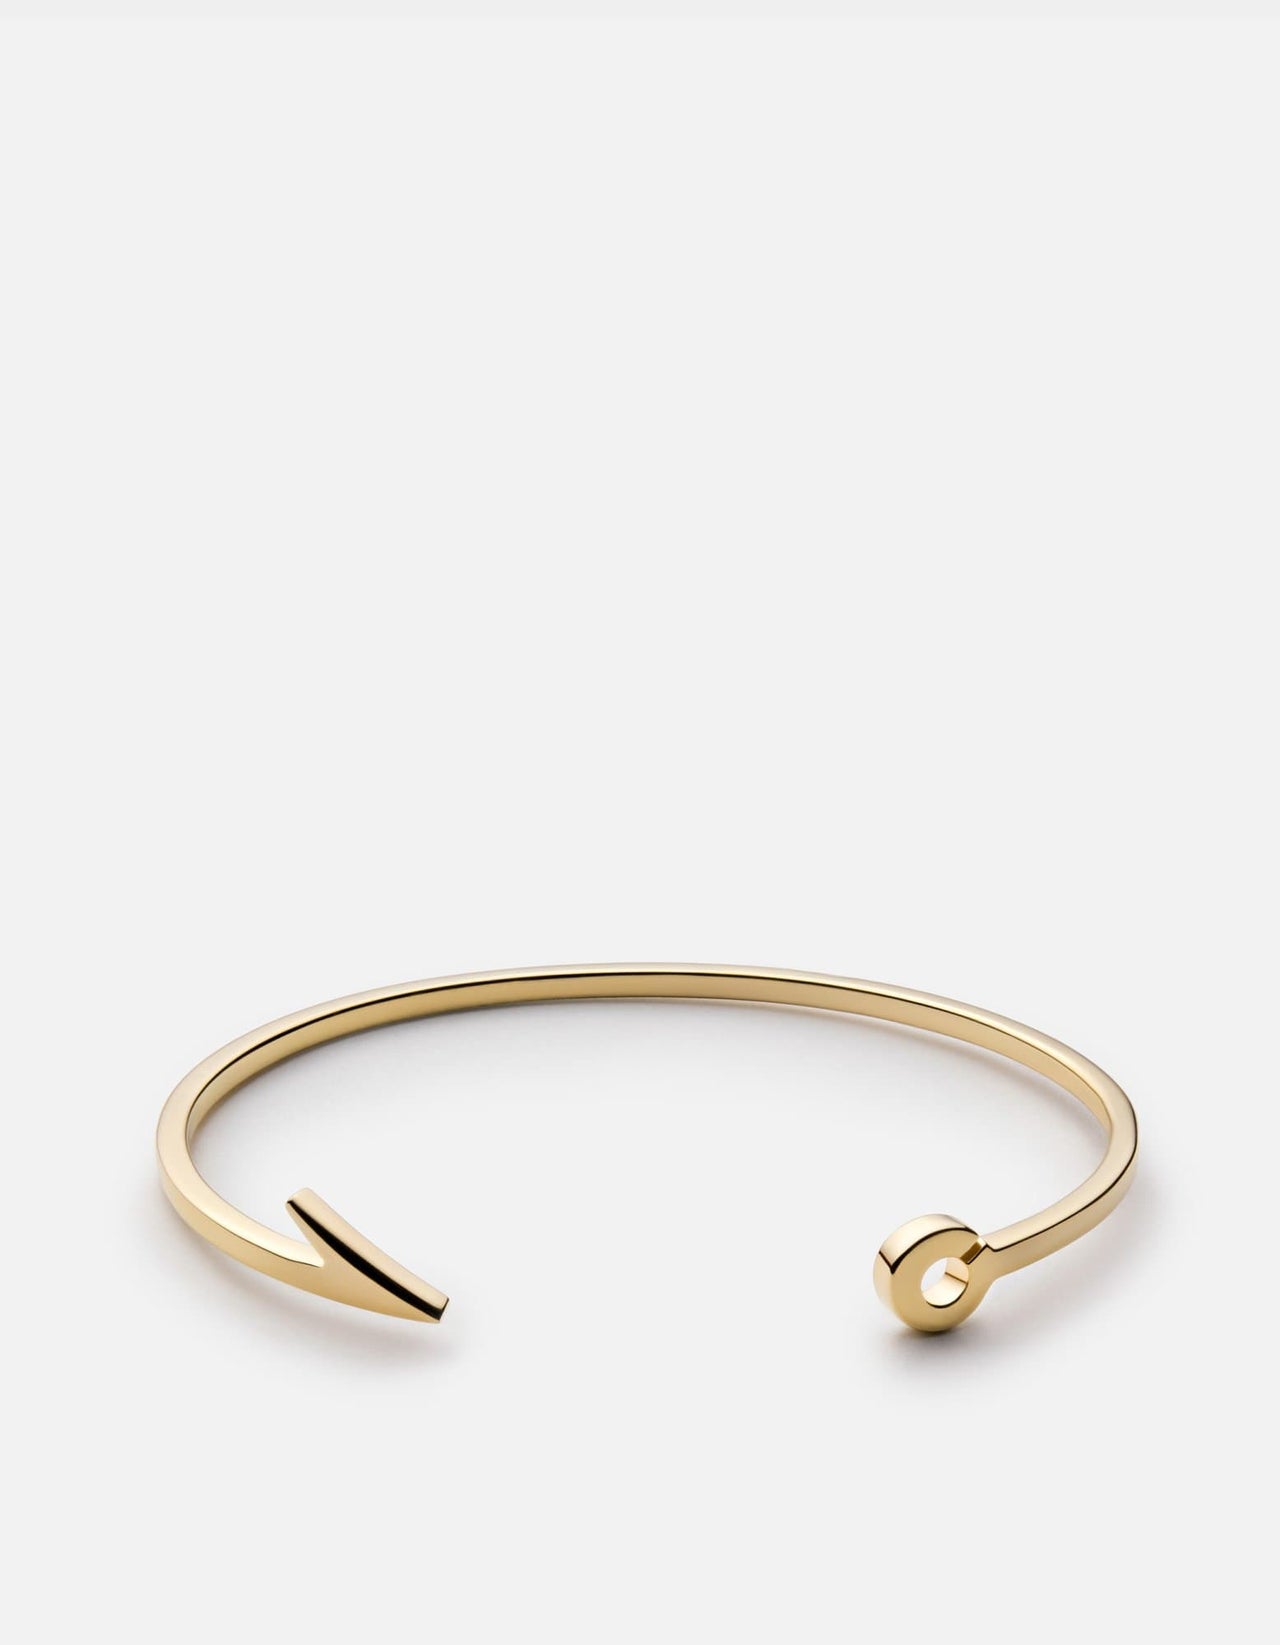 Thin Fish Hook Cuff Bracelet, Gold Vermeil | Women's Cuffs | Miansai